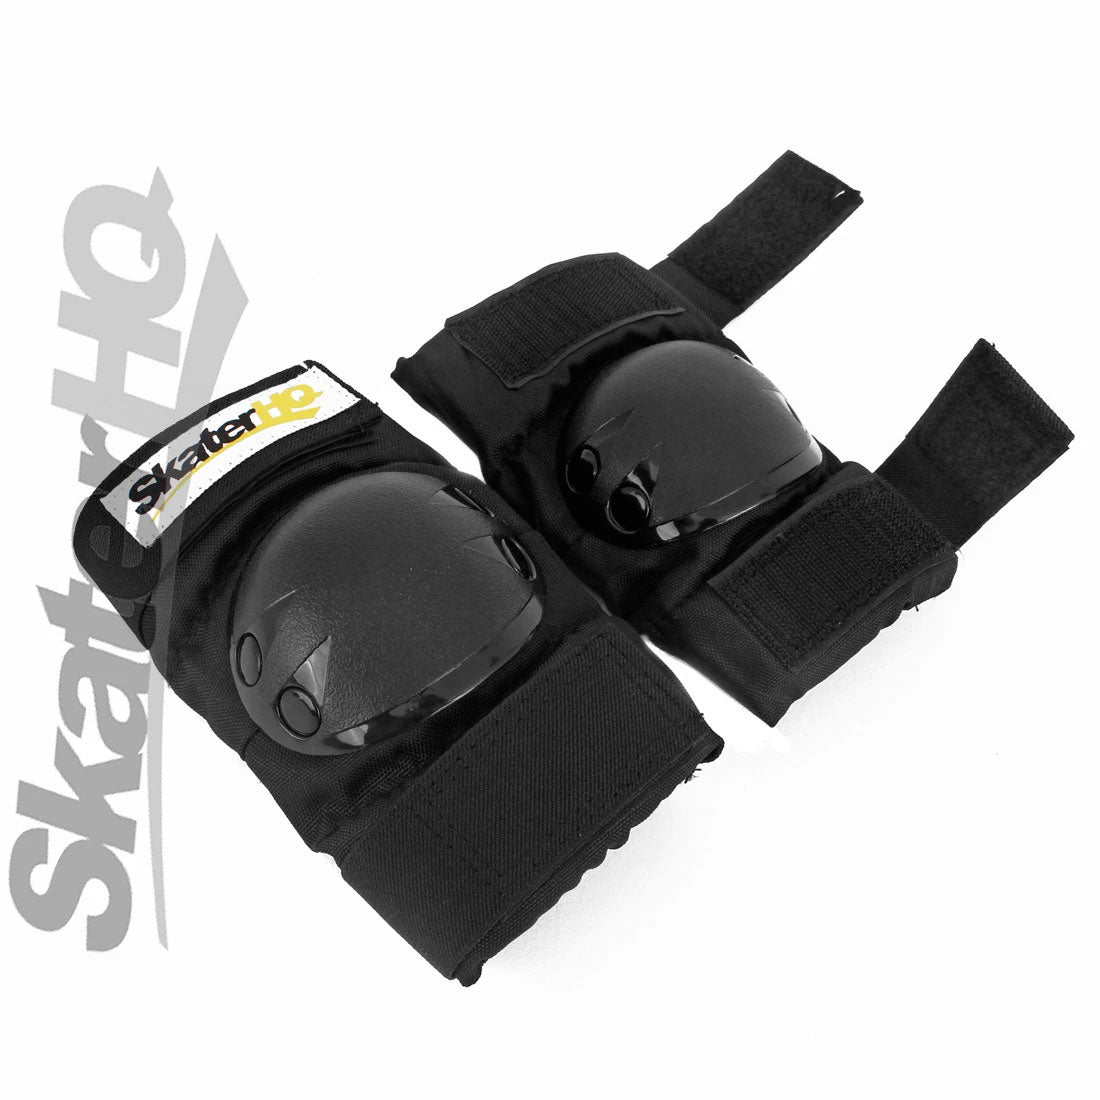 Skater HQ Knee/Elbow Set - Grommet Protective Gear